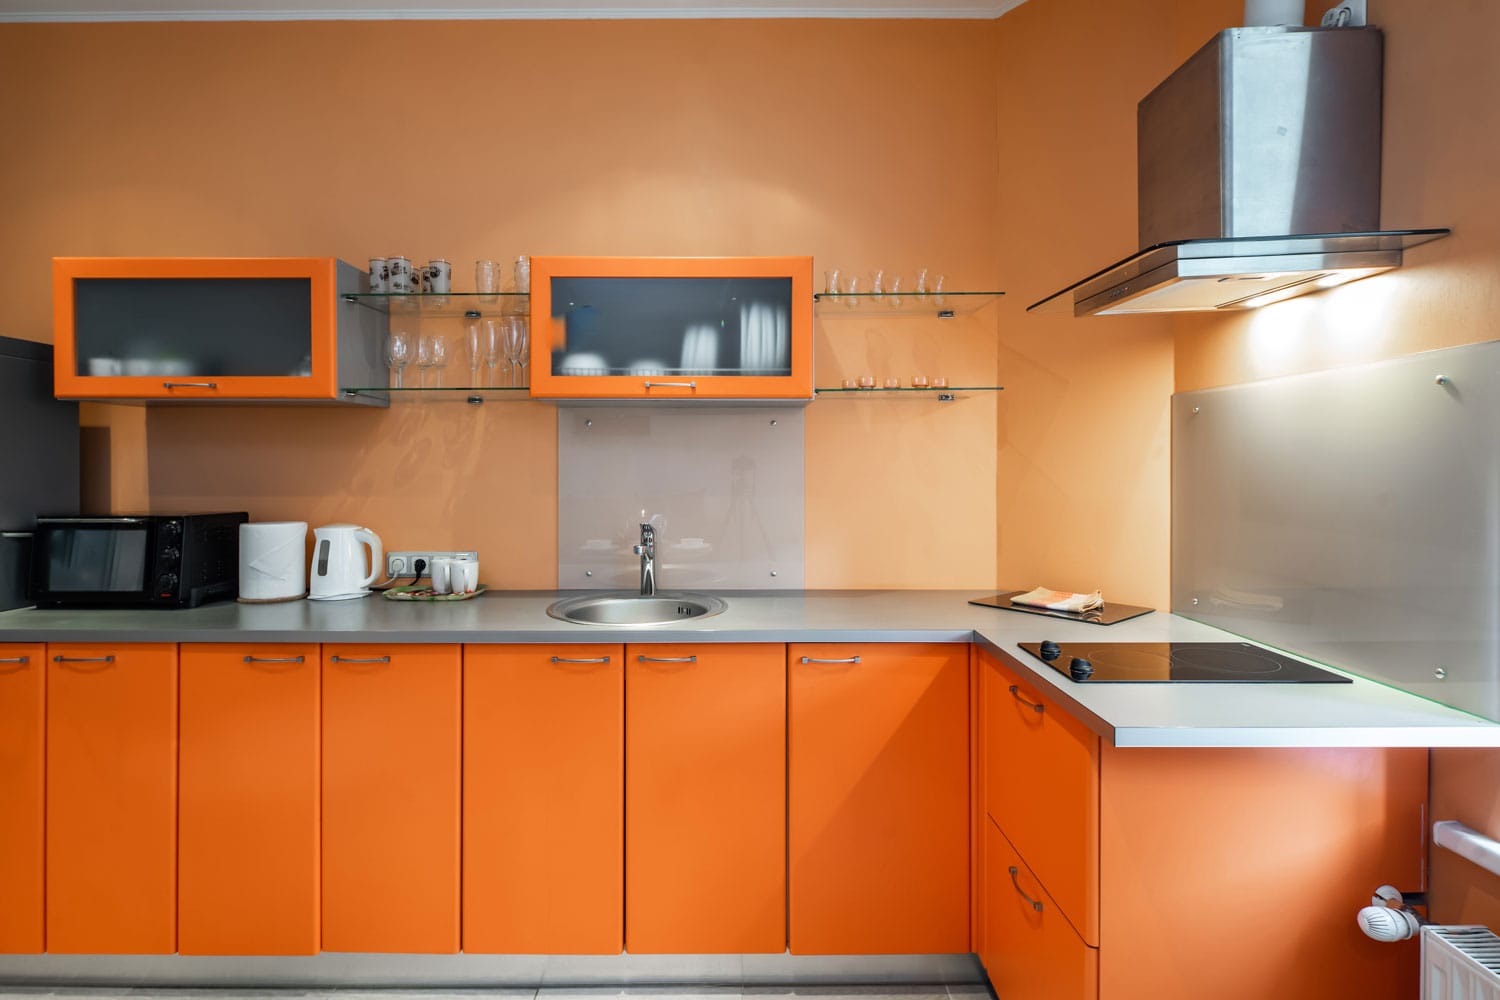 A gorgeous orange kitchen with matching orange walls